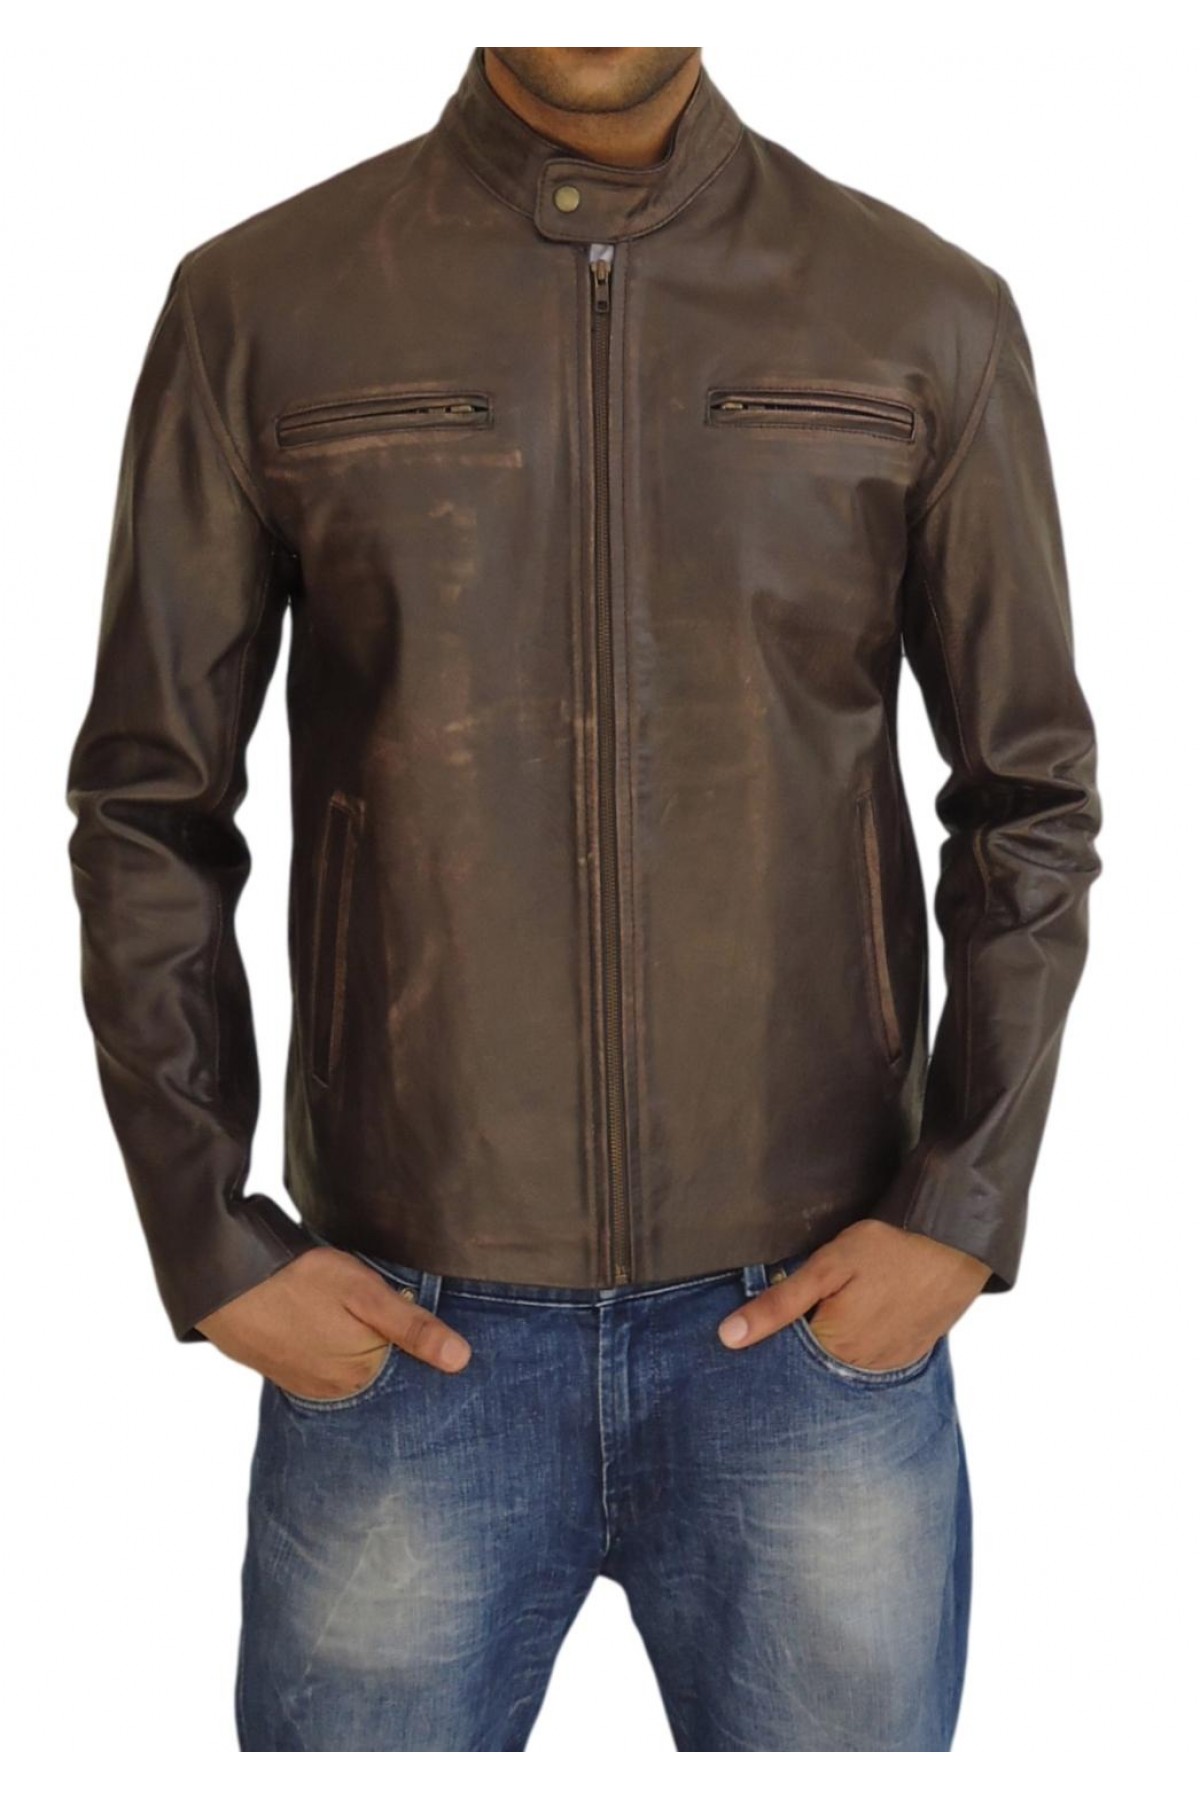 Mark Wahlberg Contraband Leather Jacket | Chris Farraday Jacket